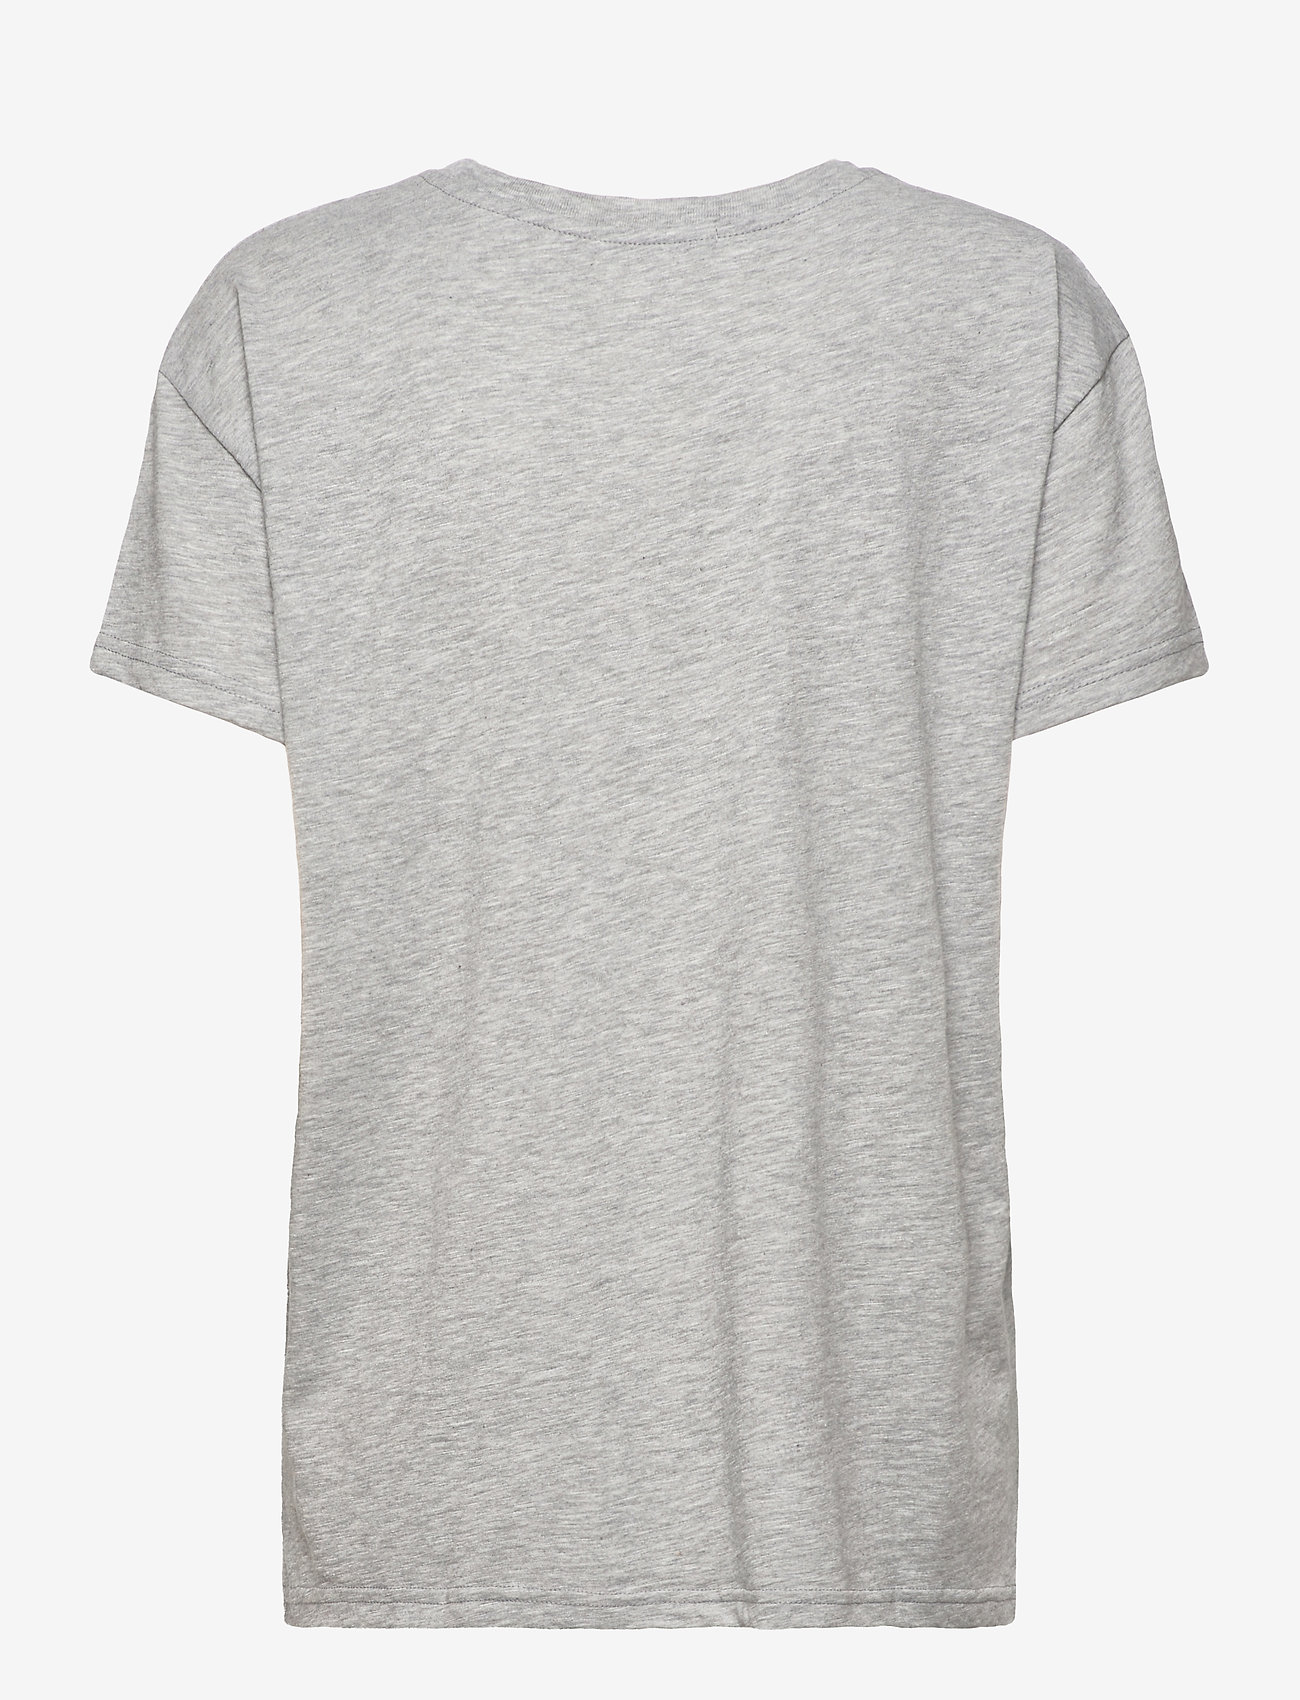 Coster Copenhagen - Oversize t-shirt with normal print - t-särgid - light grey melange - 1